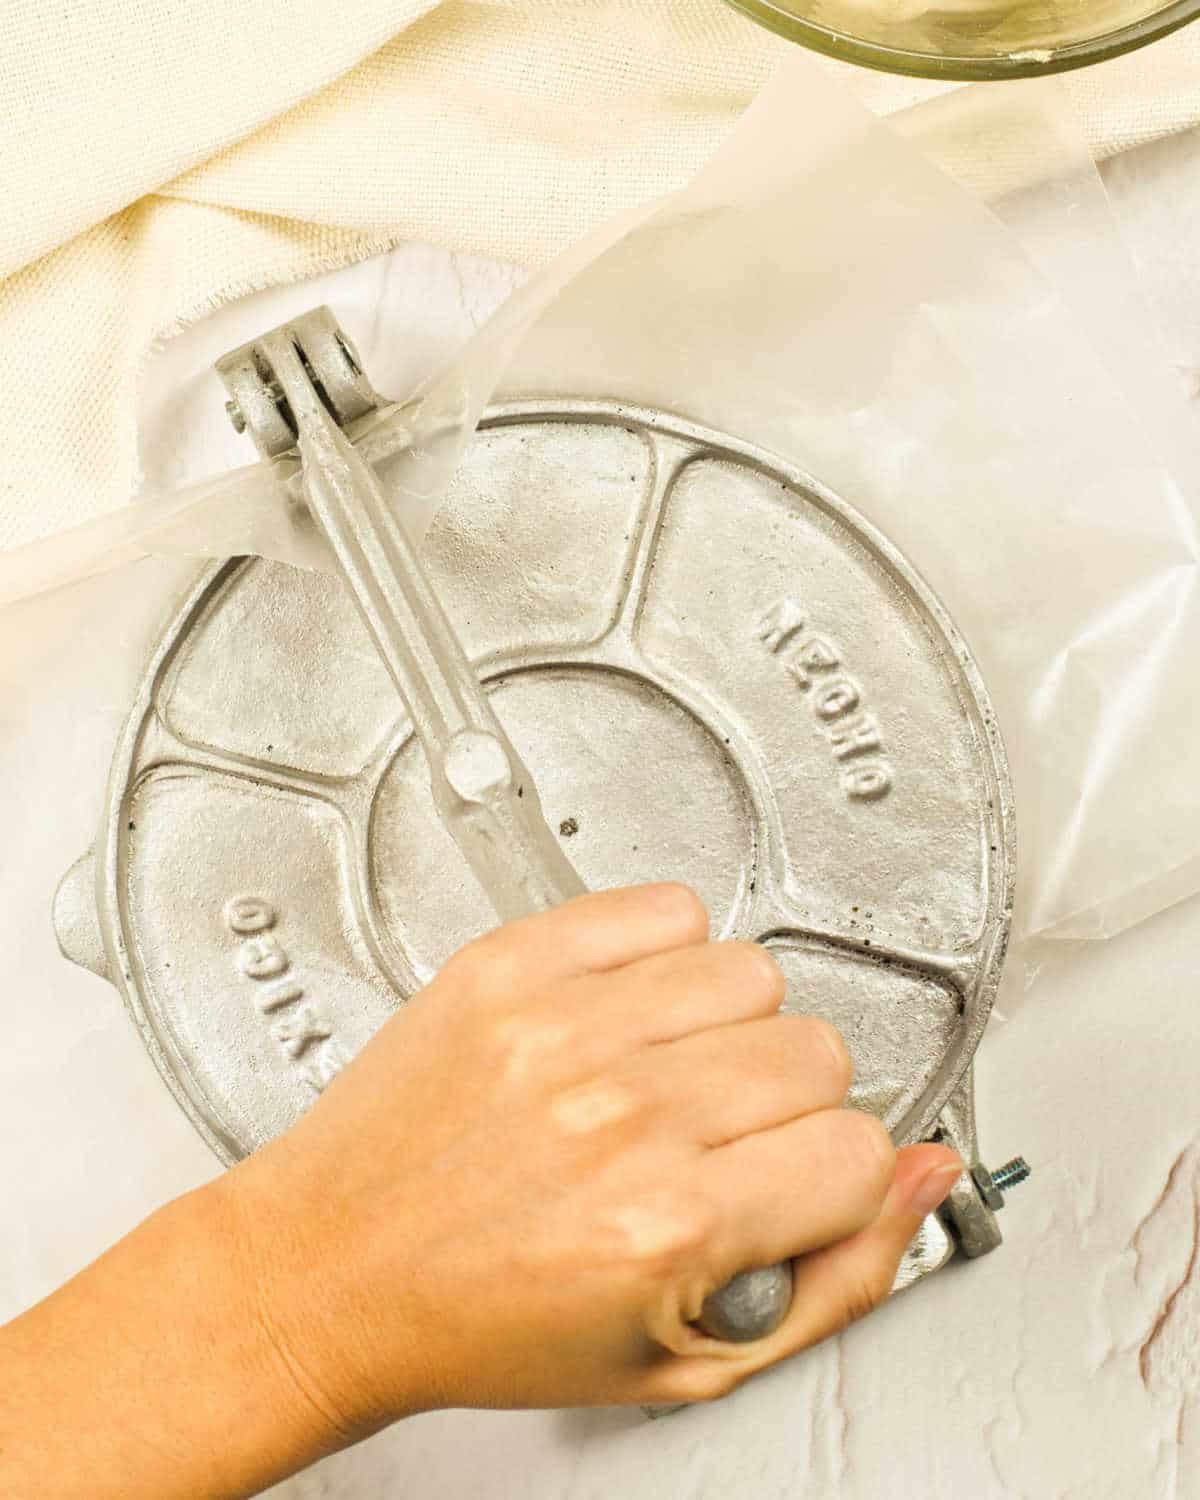 A hand closing a tortilla press on a white surface.